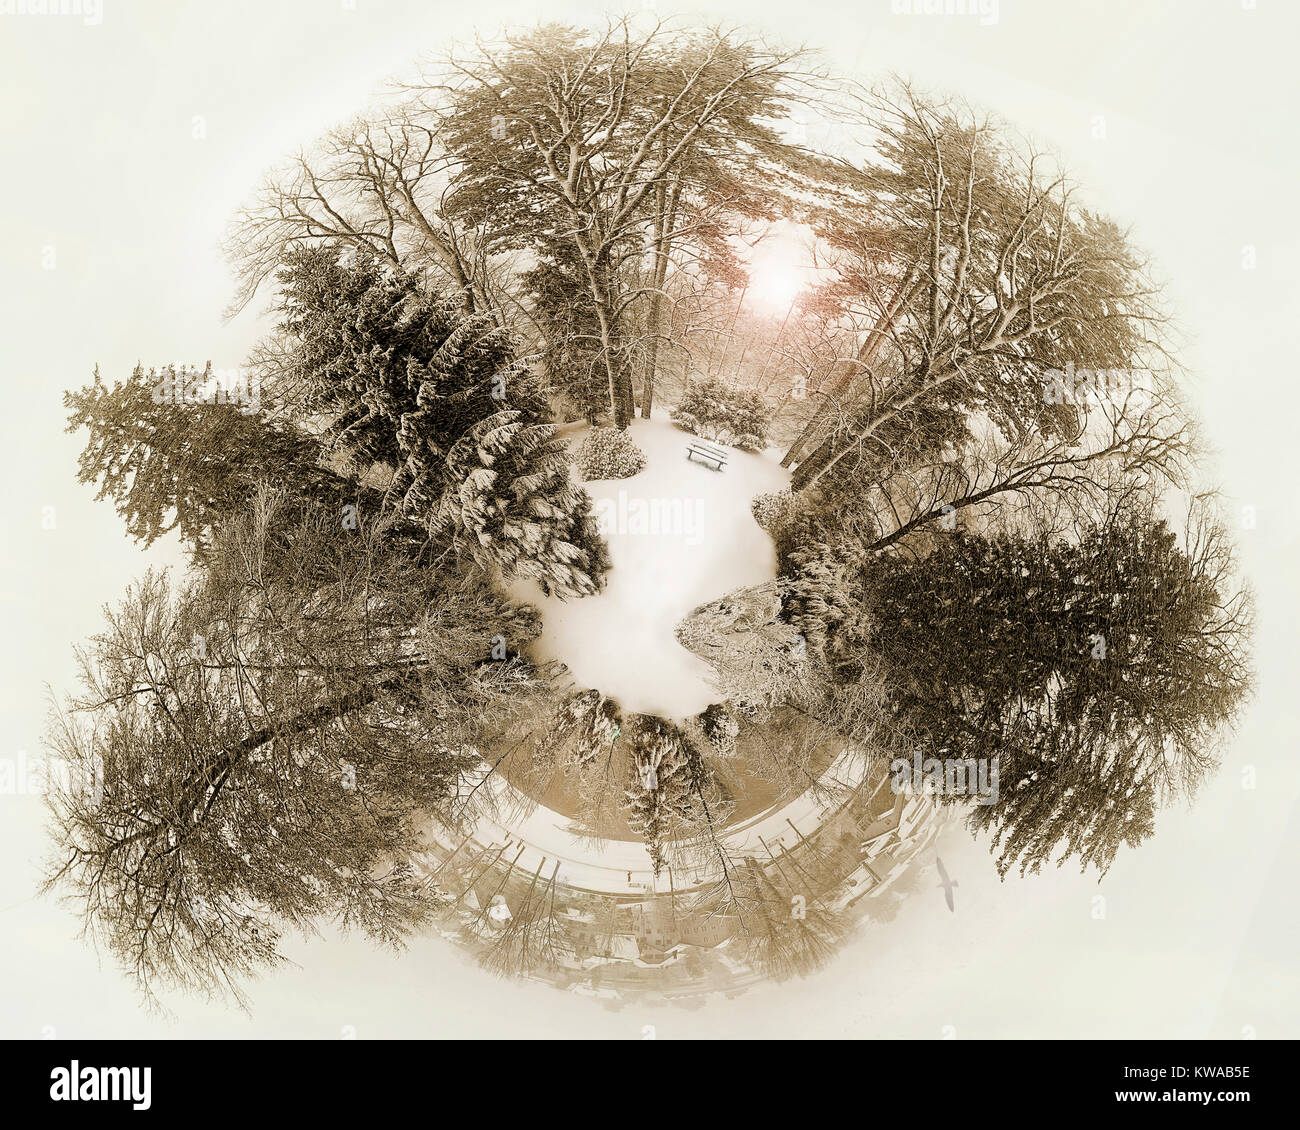 CONCEPT PHOTOGRAPHY: Wintergarden - Small Planet Image Stock Photo